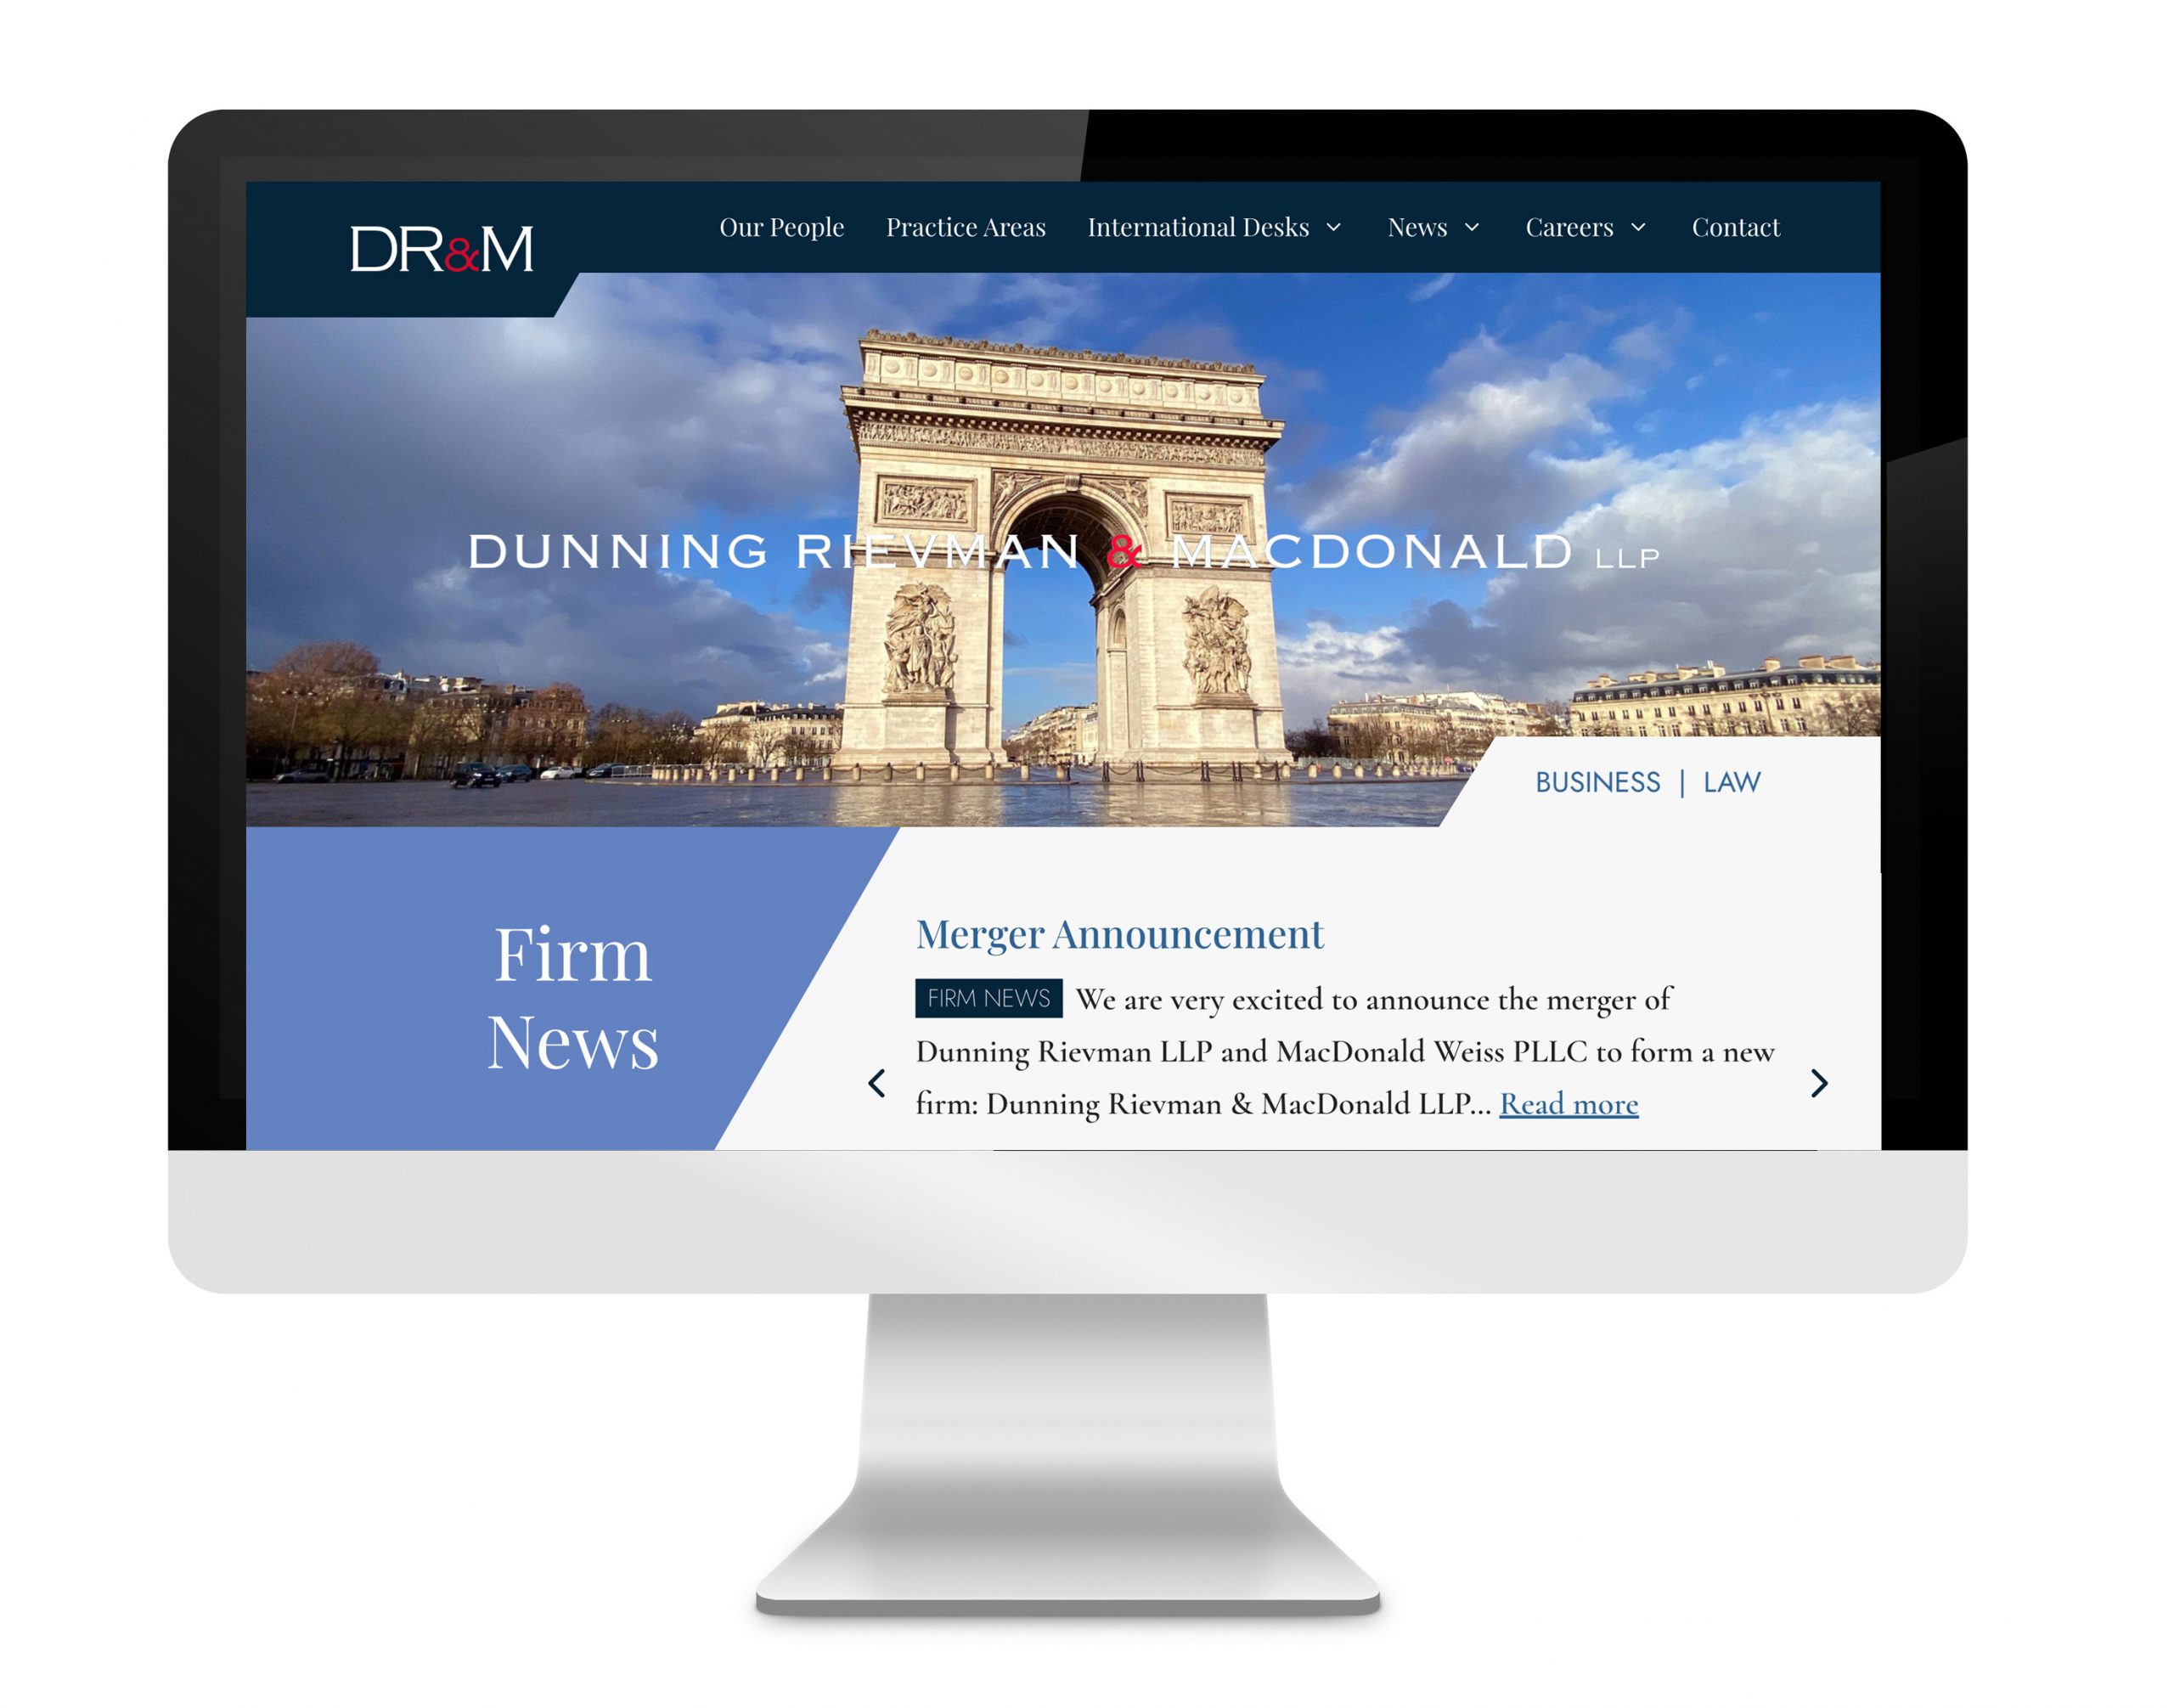 Dunning Rievman & MacDonald website designed by DLS Design